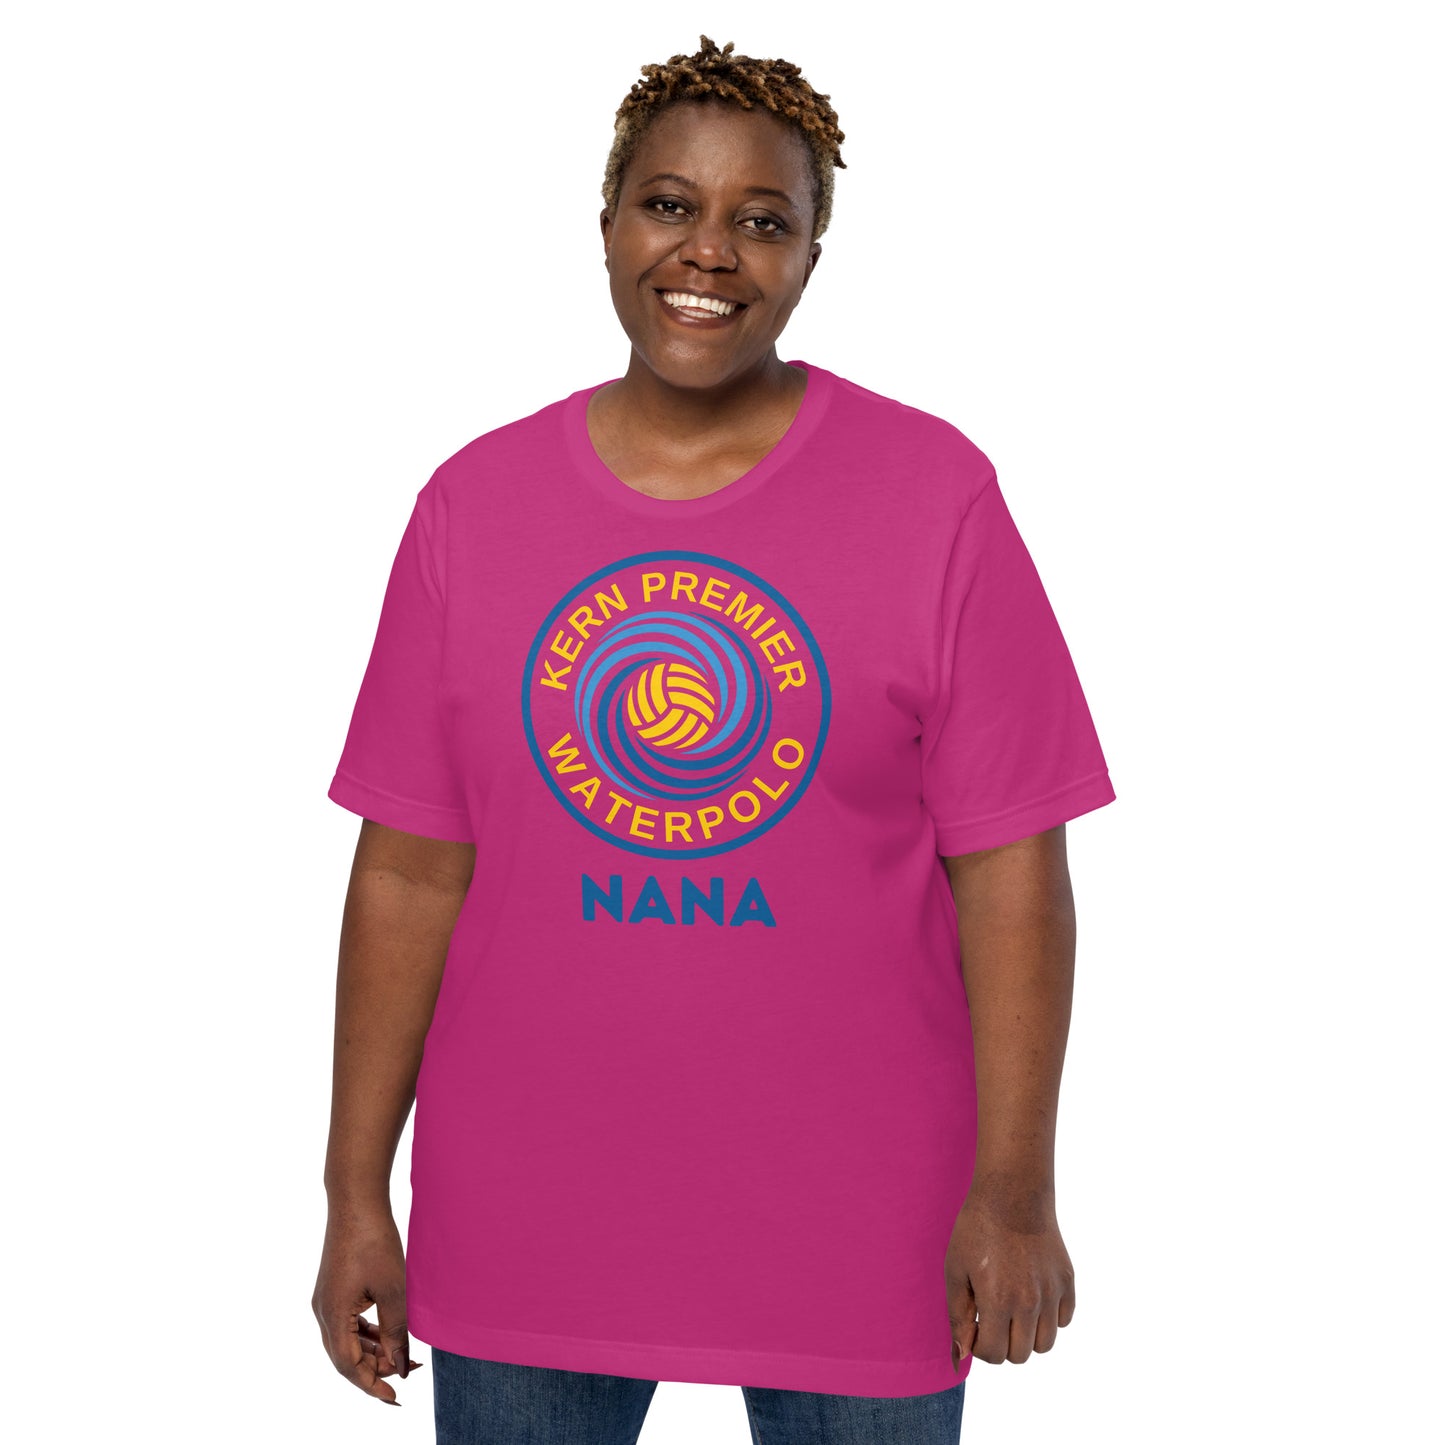 Kern Premier Nana - Circle Logo - Unisex Soft T-shirt - Bella Canvas 3001